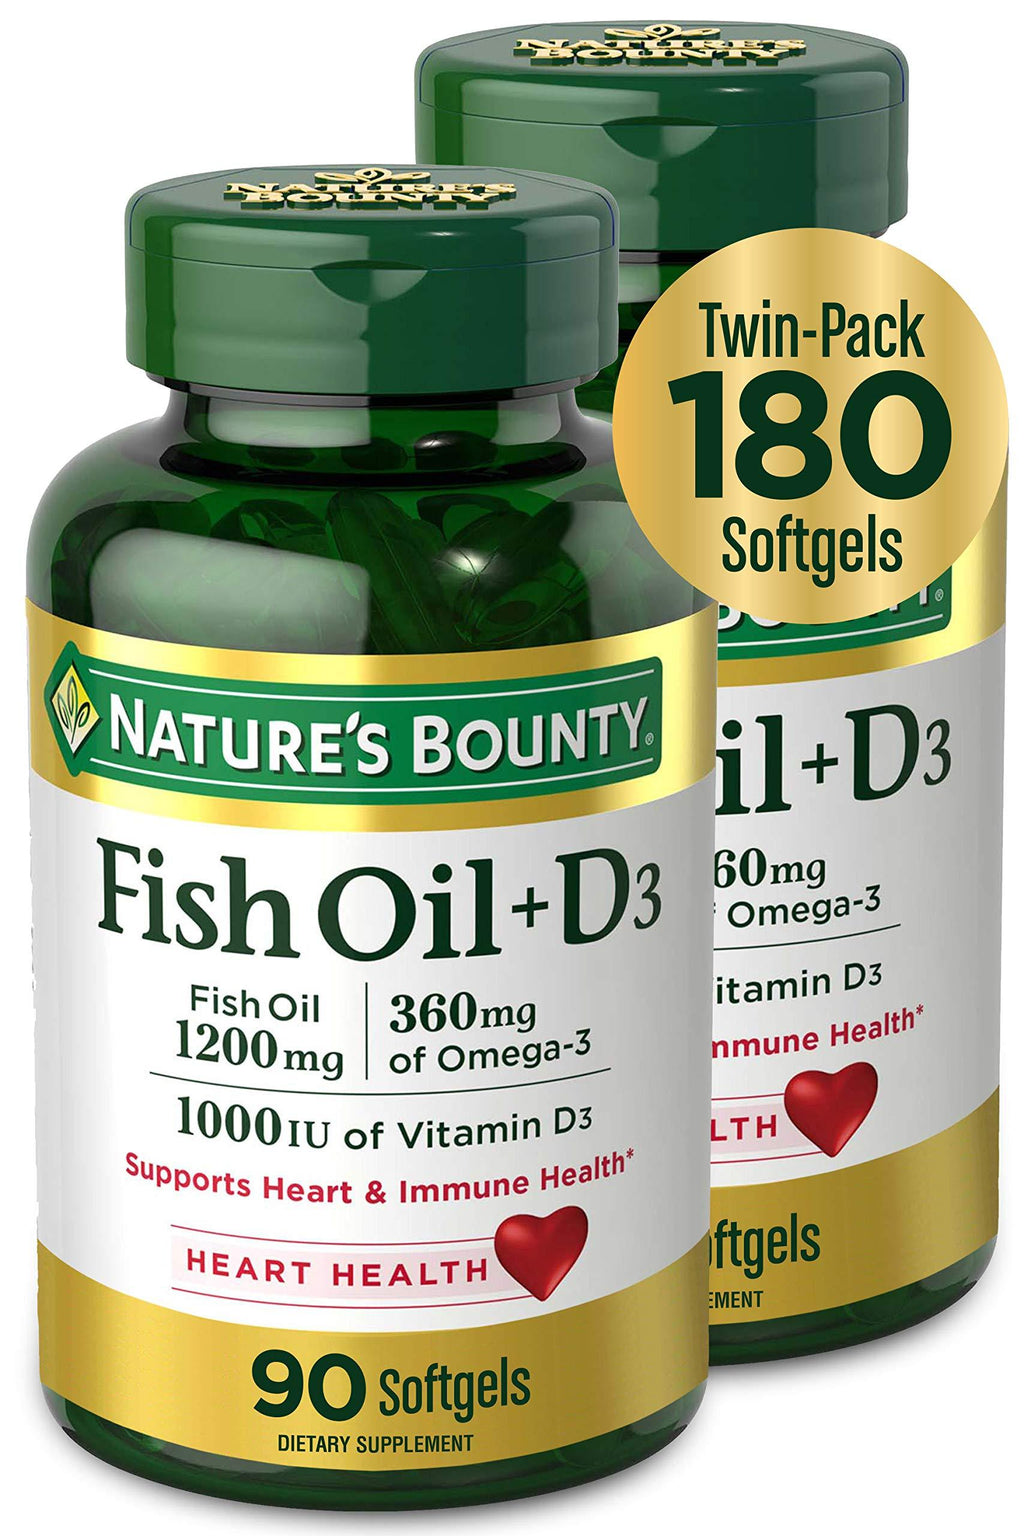 Nature’s Beauty Fish Oil + D3, 1200mg, 360mg of Omega-3, 1000IU of Vitamin D3, 90 (2-Pack, 180 Total) - BeesActive Australia